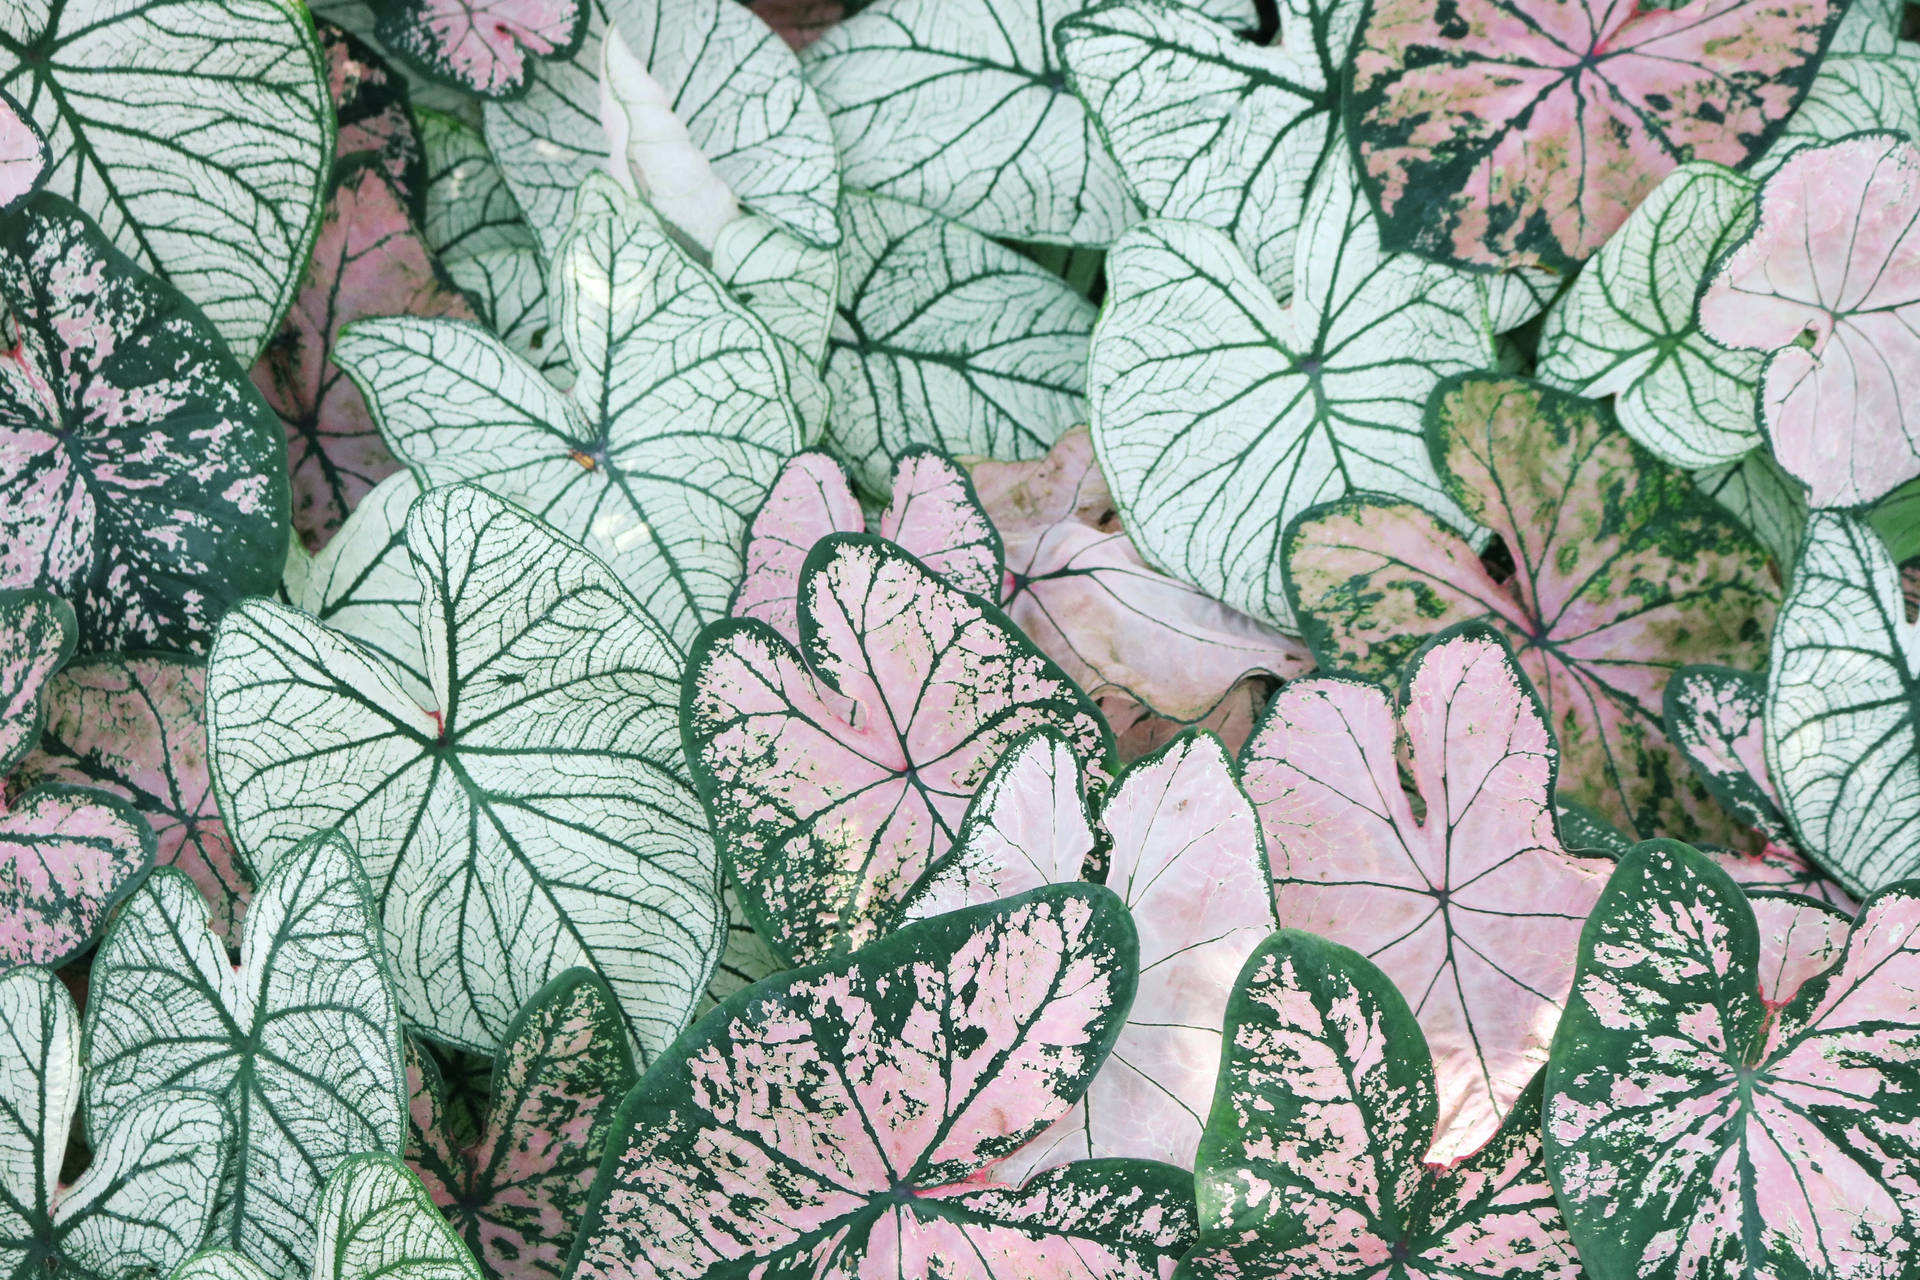 Leaf Pattern With Green Minimalist Background